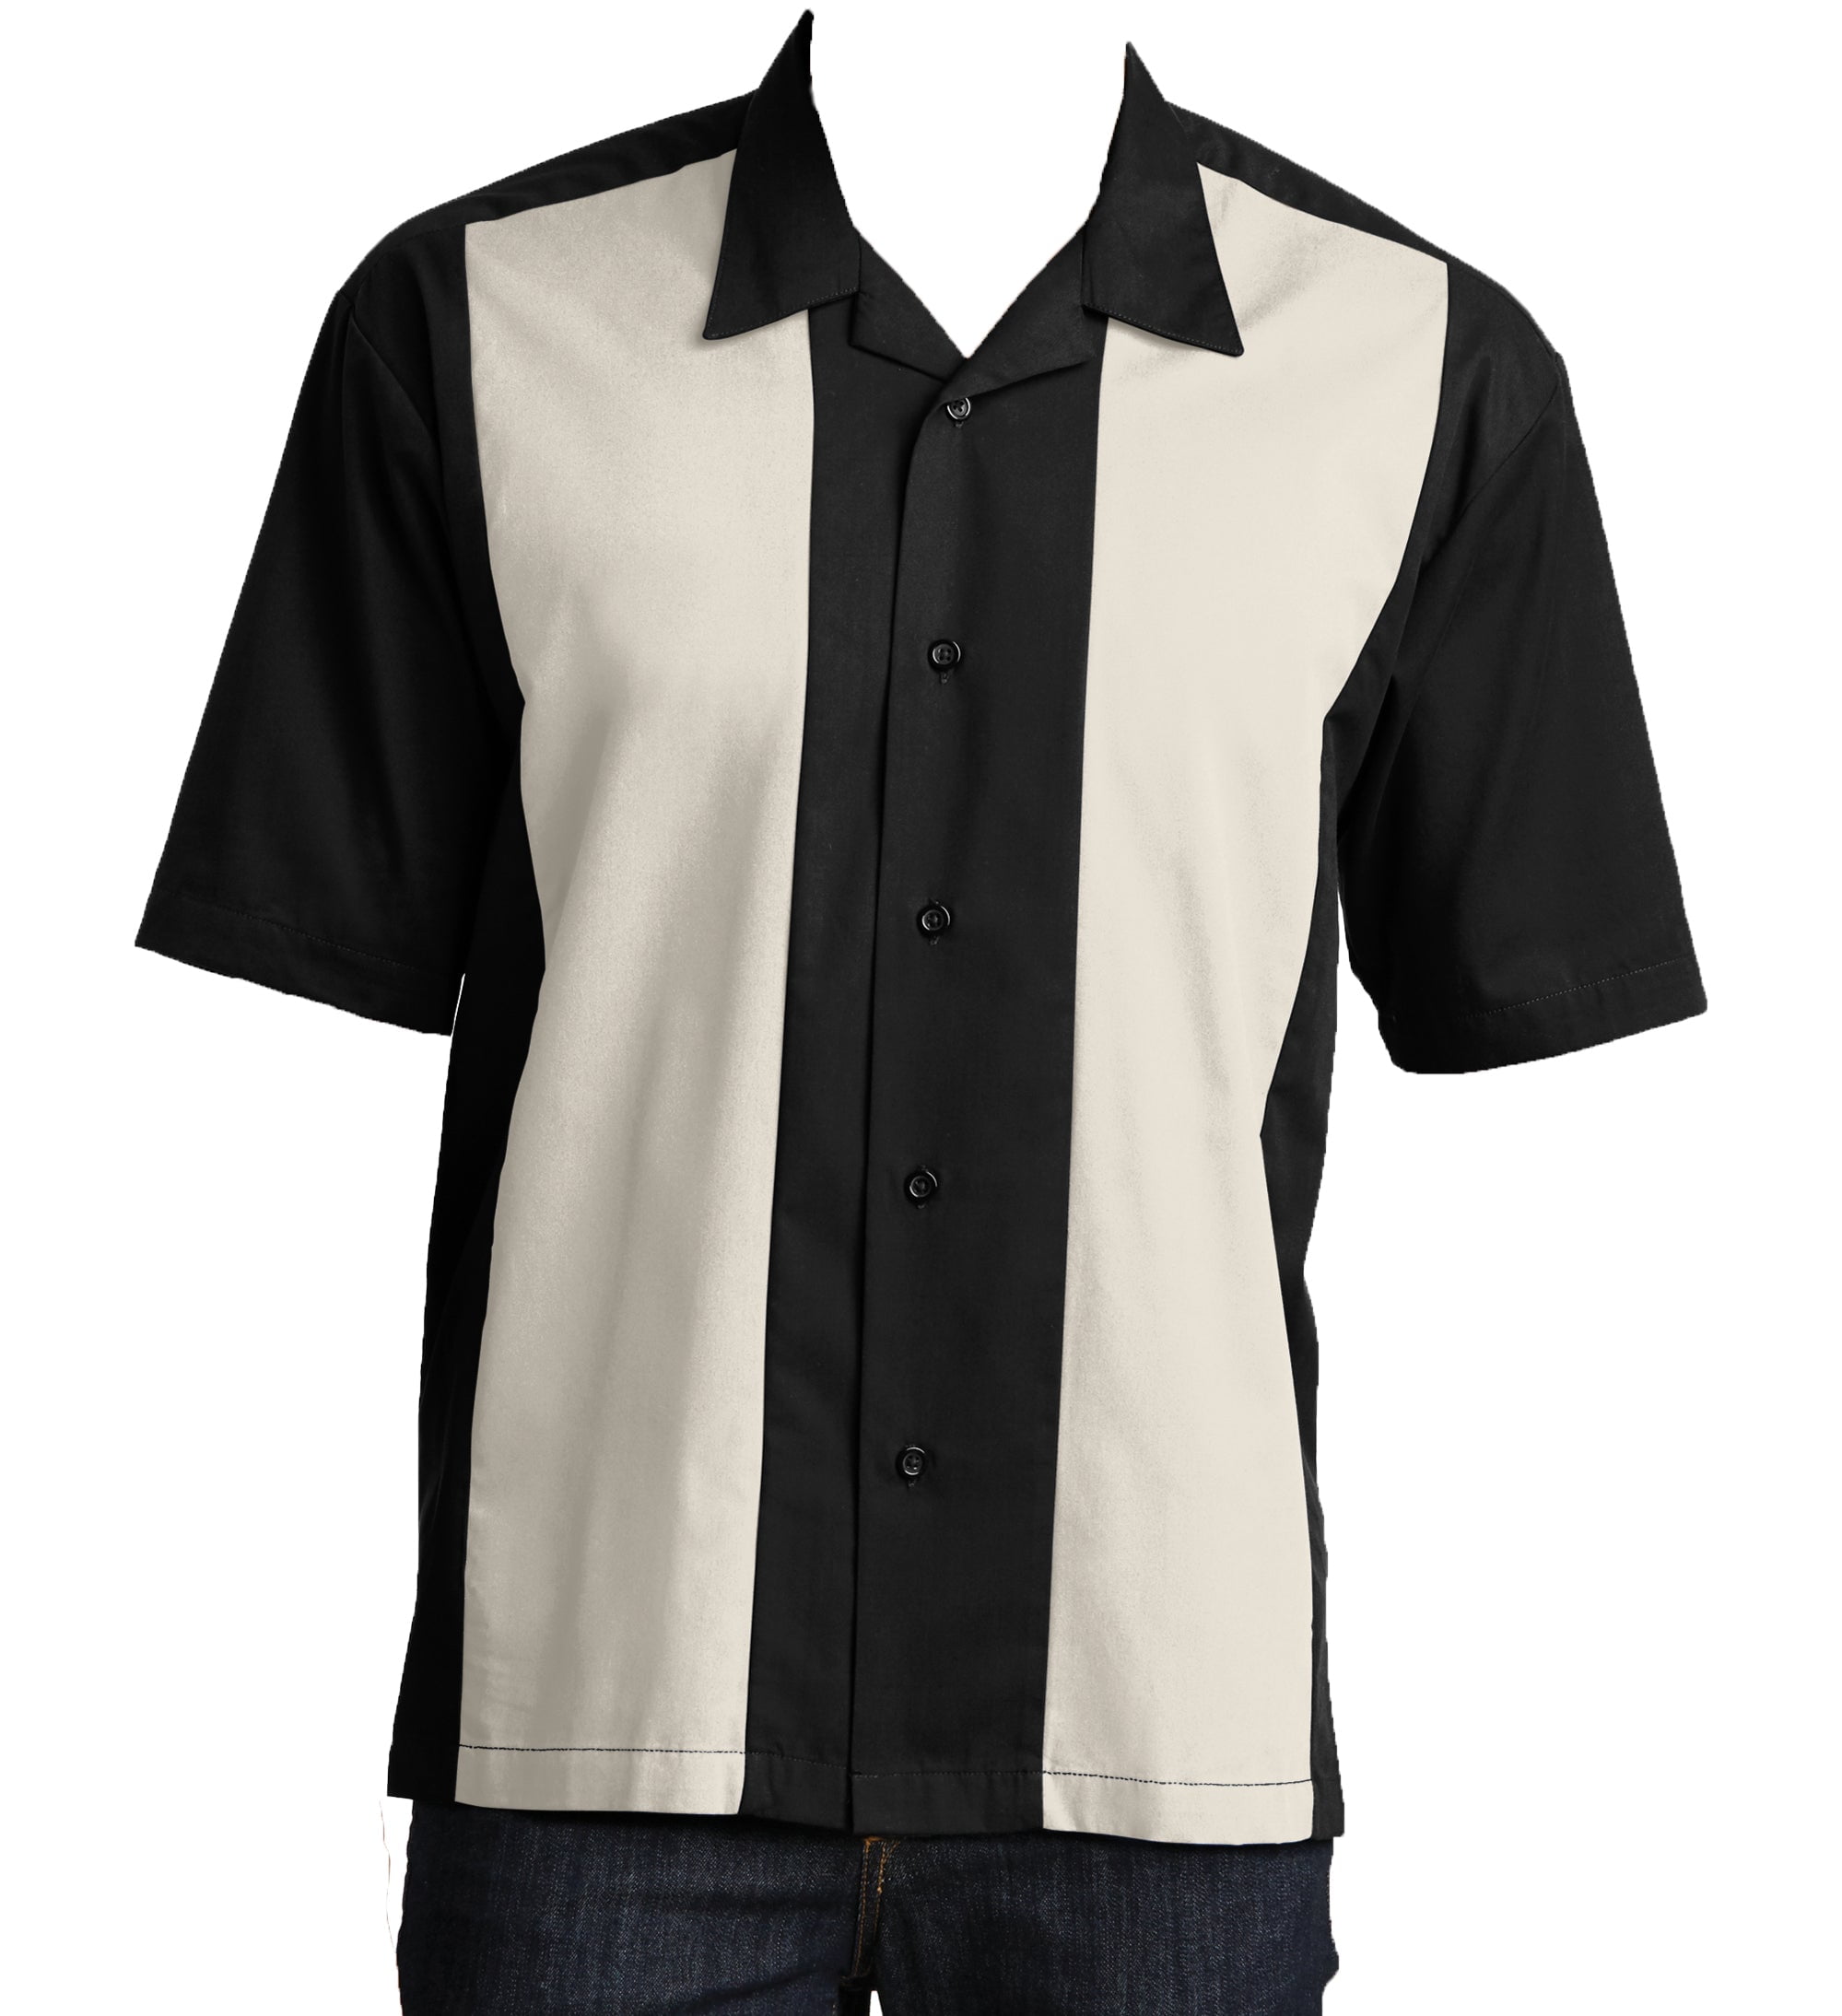 Las Vegas Polo Shirt, Polo Tee Shirts Men, Poker Shirt, Vegas Poker